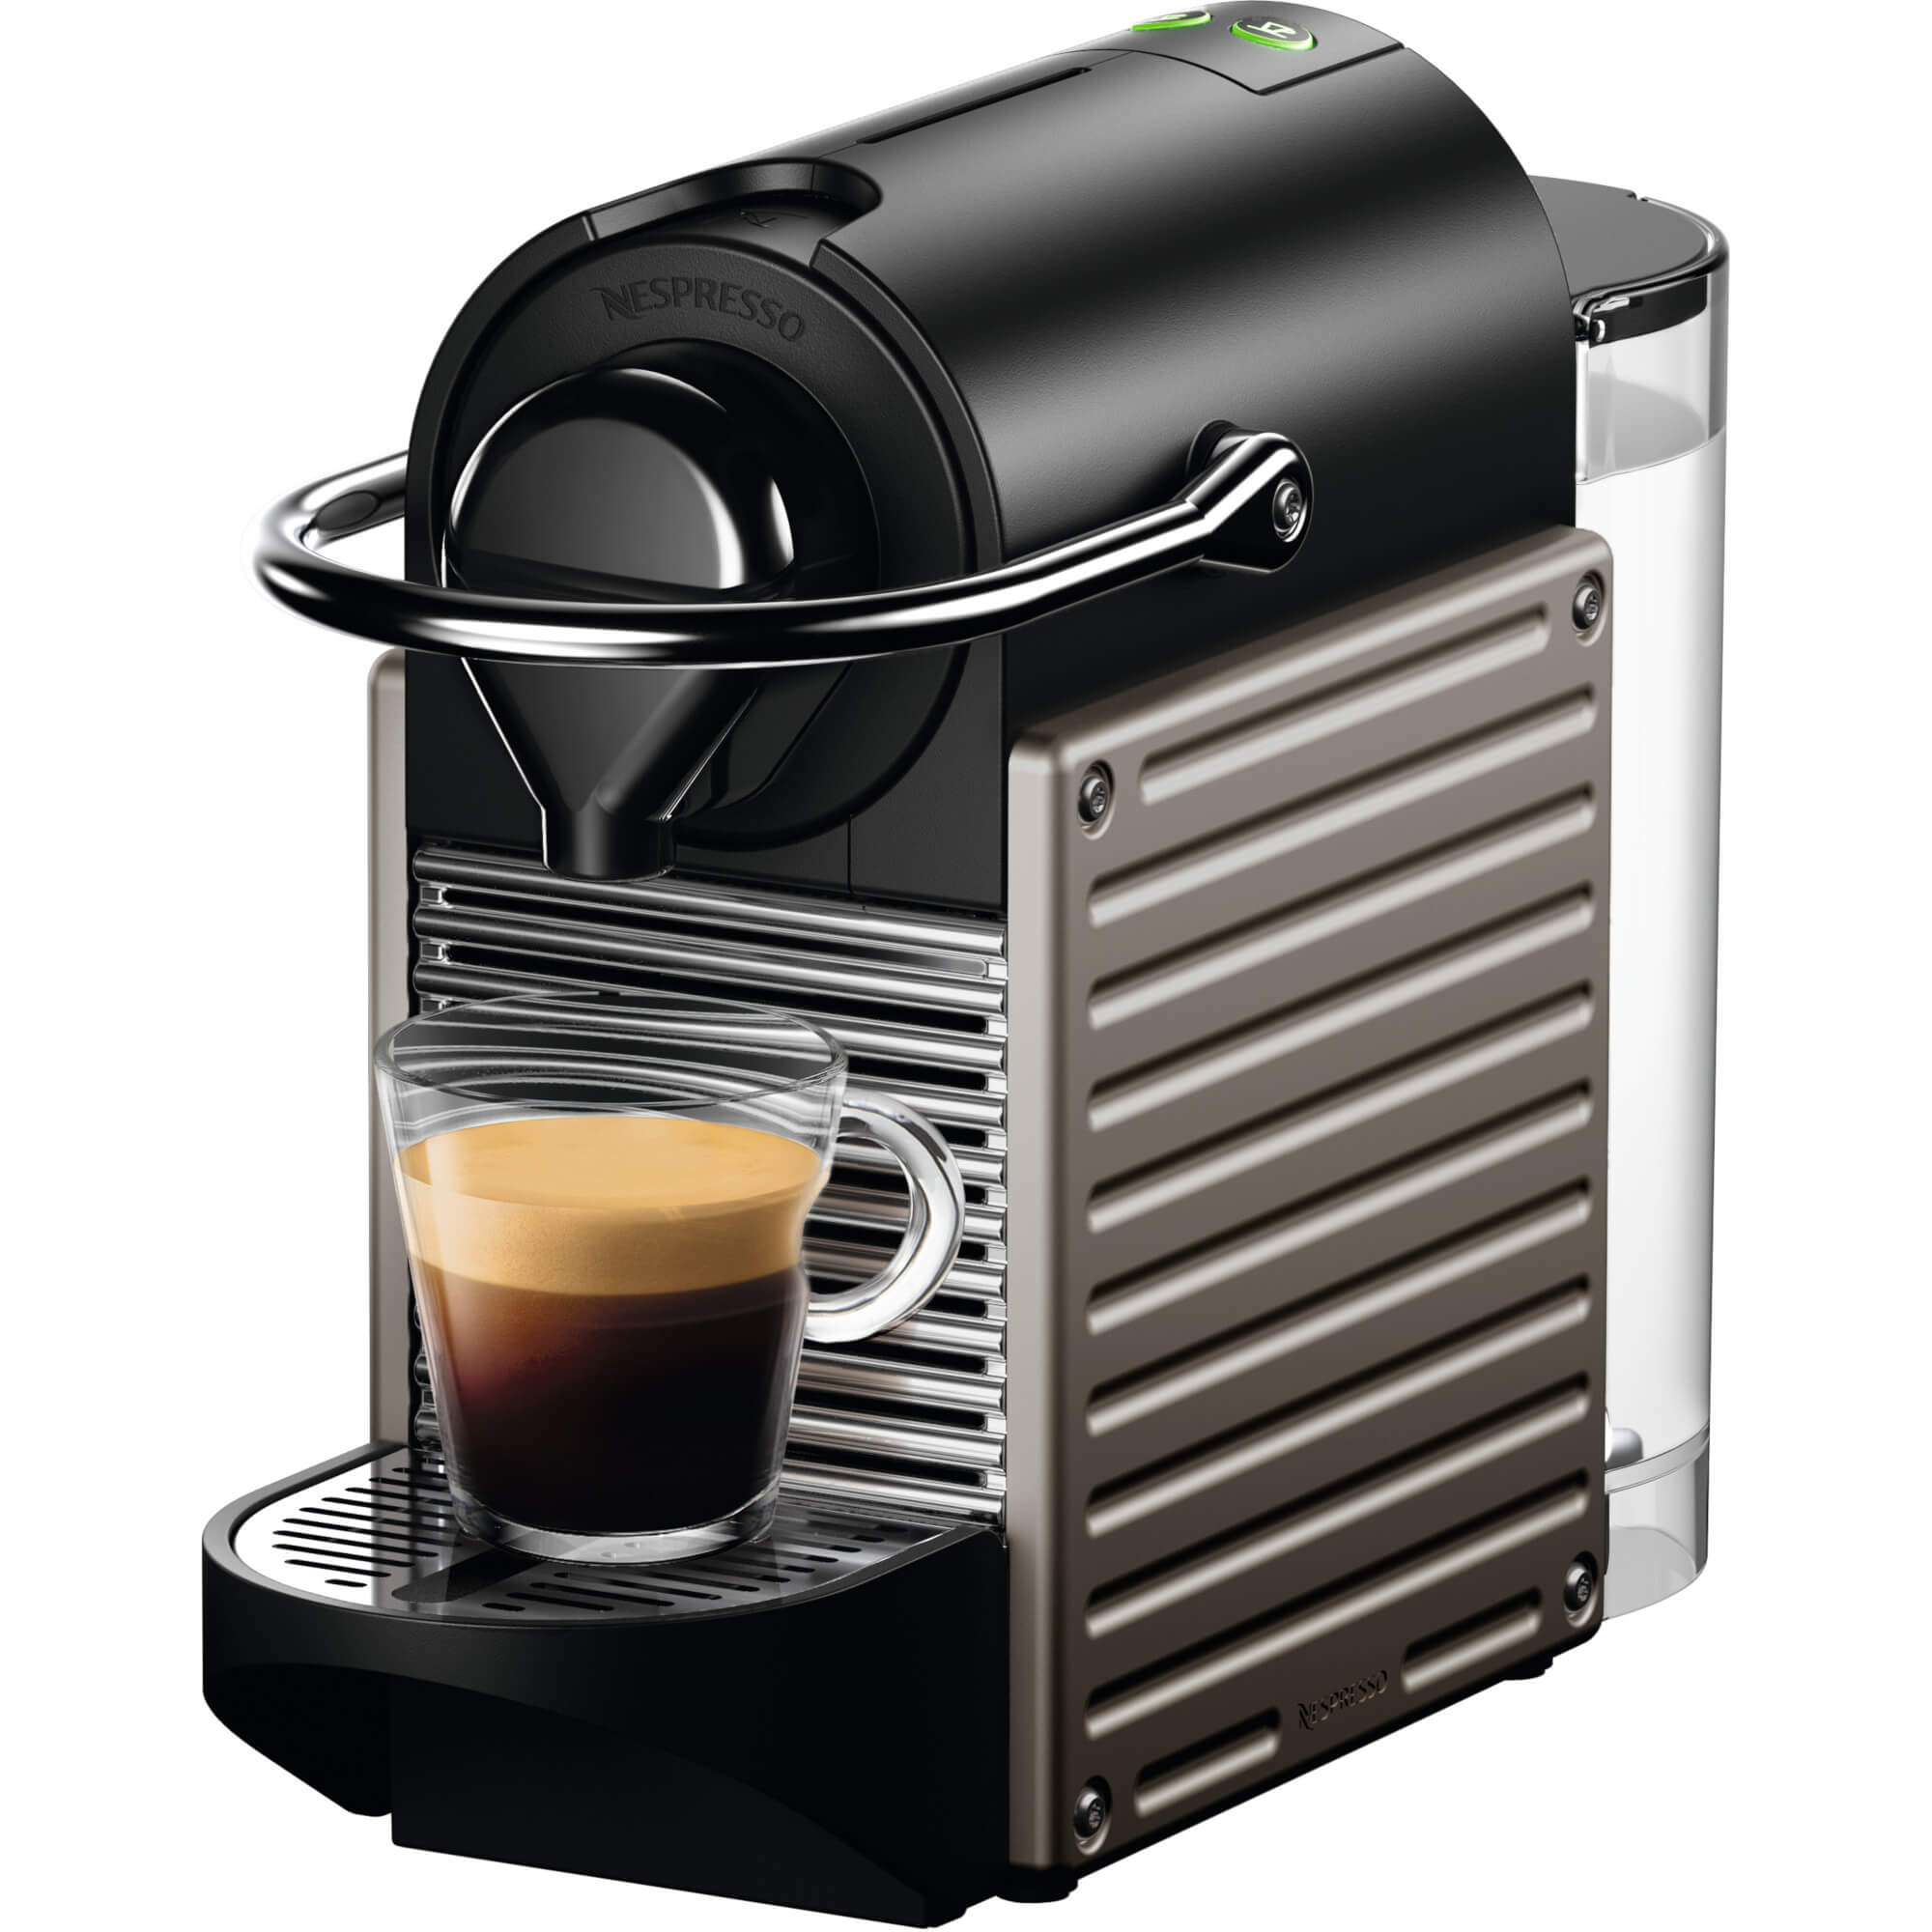  Espressor Nespresso Pixie C61, 1260 W, 0.7 L, 19 bar, Titan 